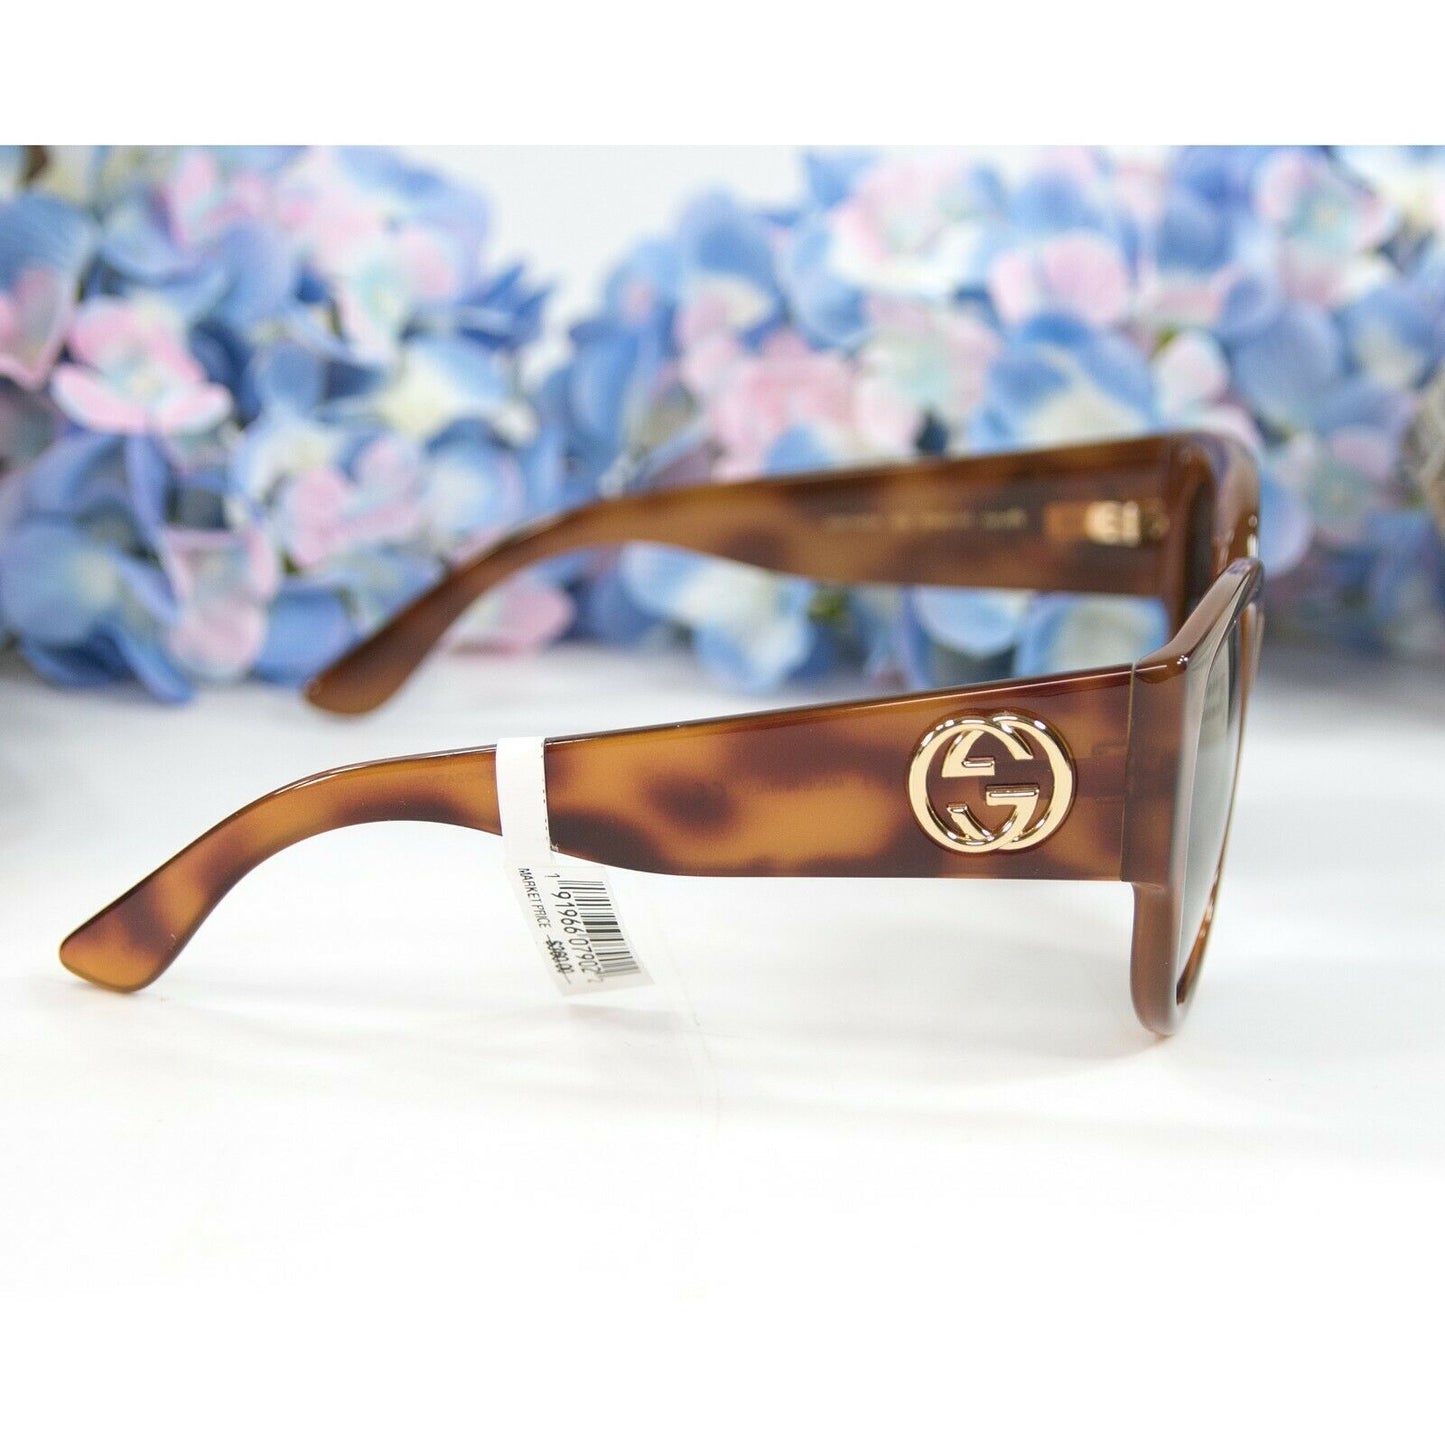 Gucci Avana Tortoise Oversize Cat Eye Sunglasses NWT GG0142SA